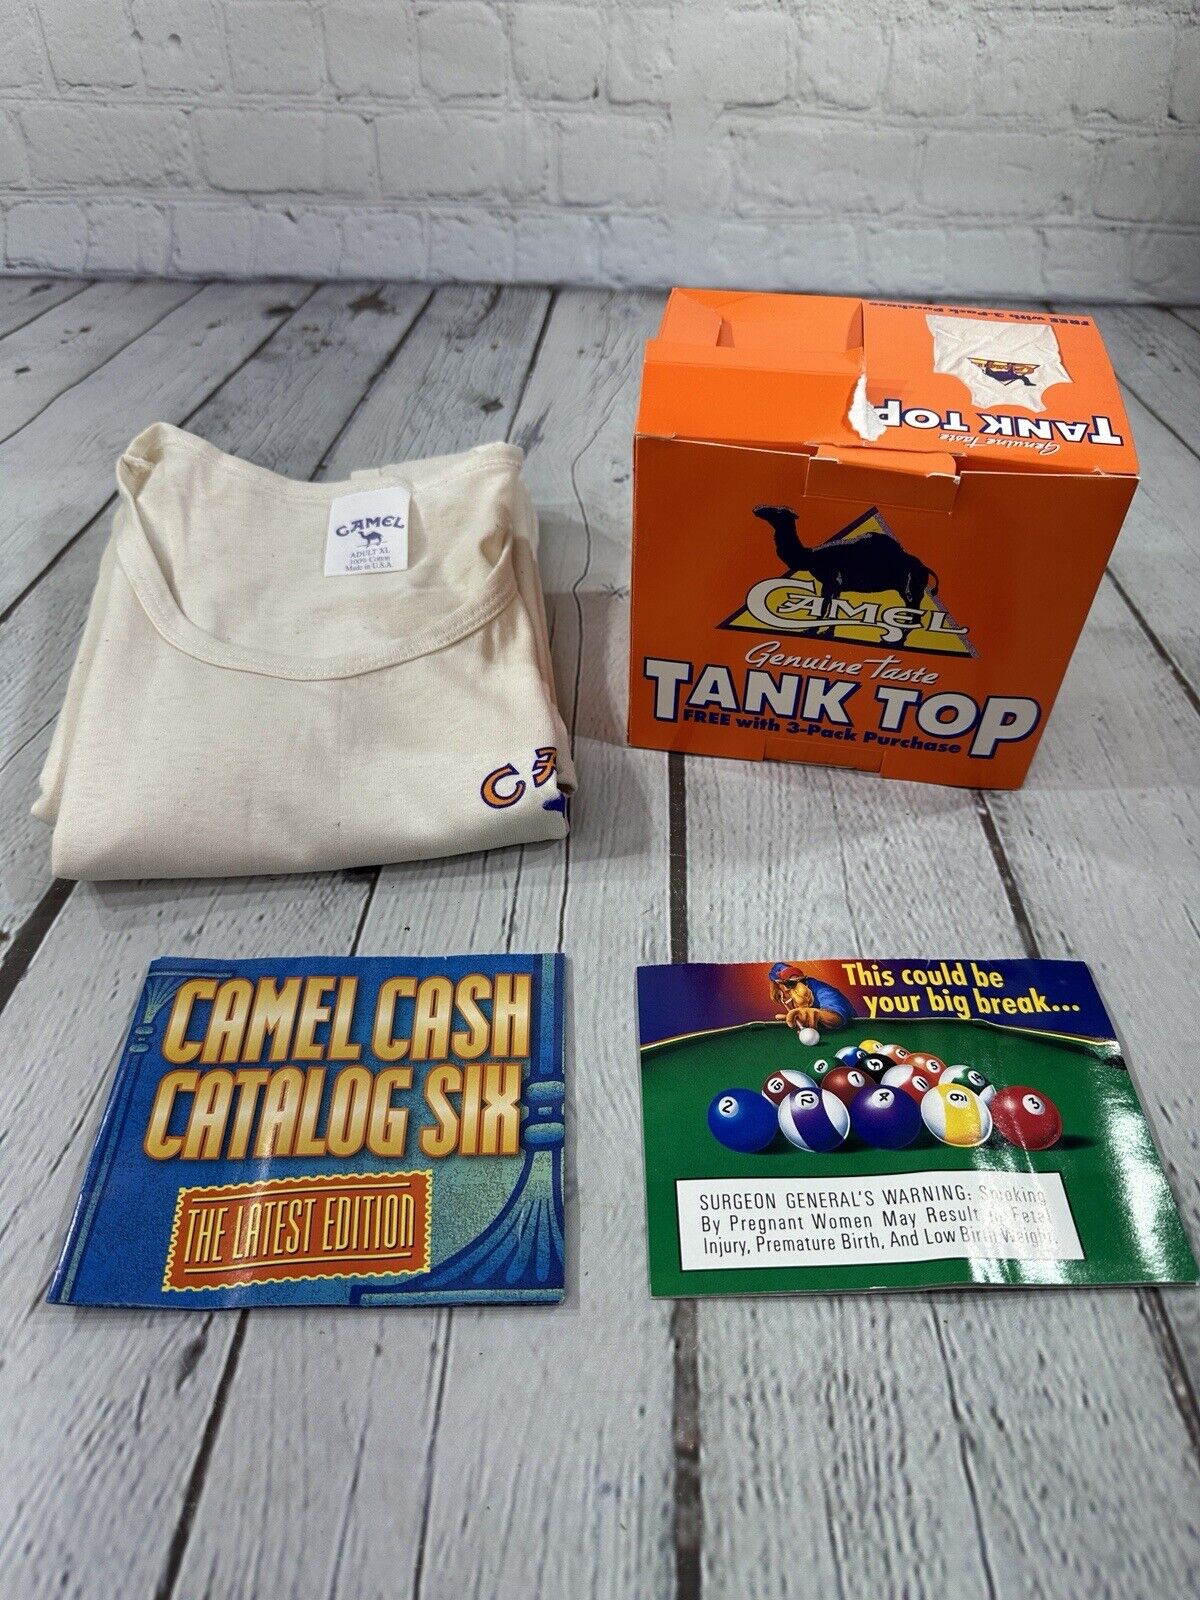 VINTAGE 1990’s CAMEL CIGARETTES SINGLE STITCH TANK TOP PROMO ORIGINAL BOX XL